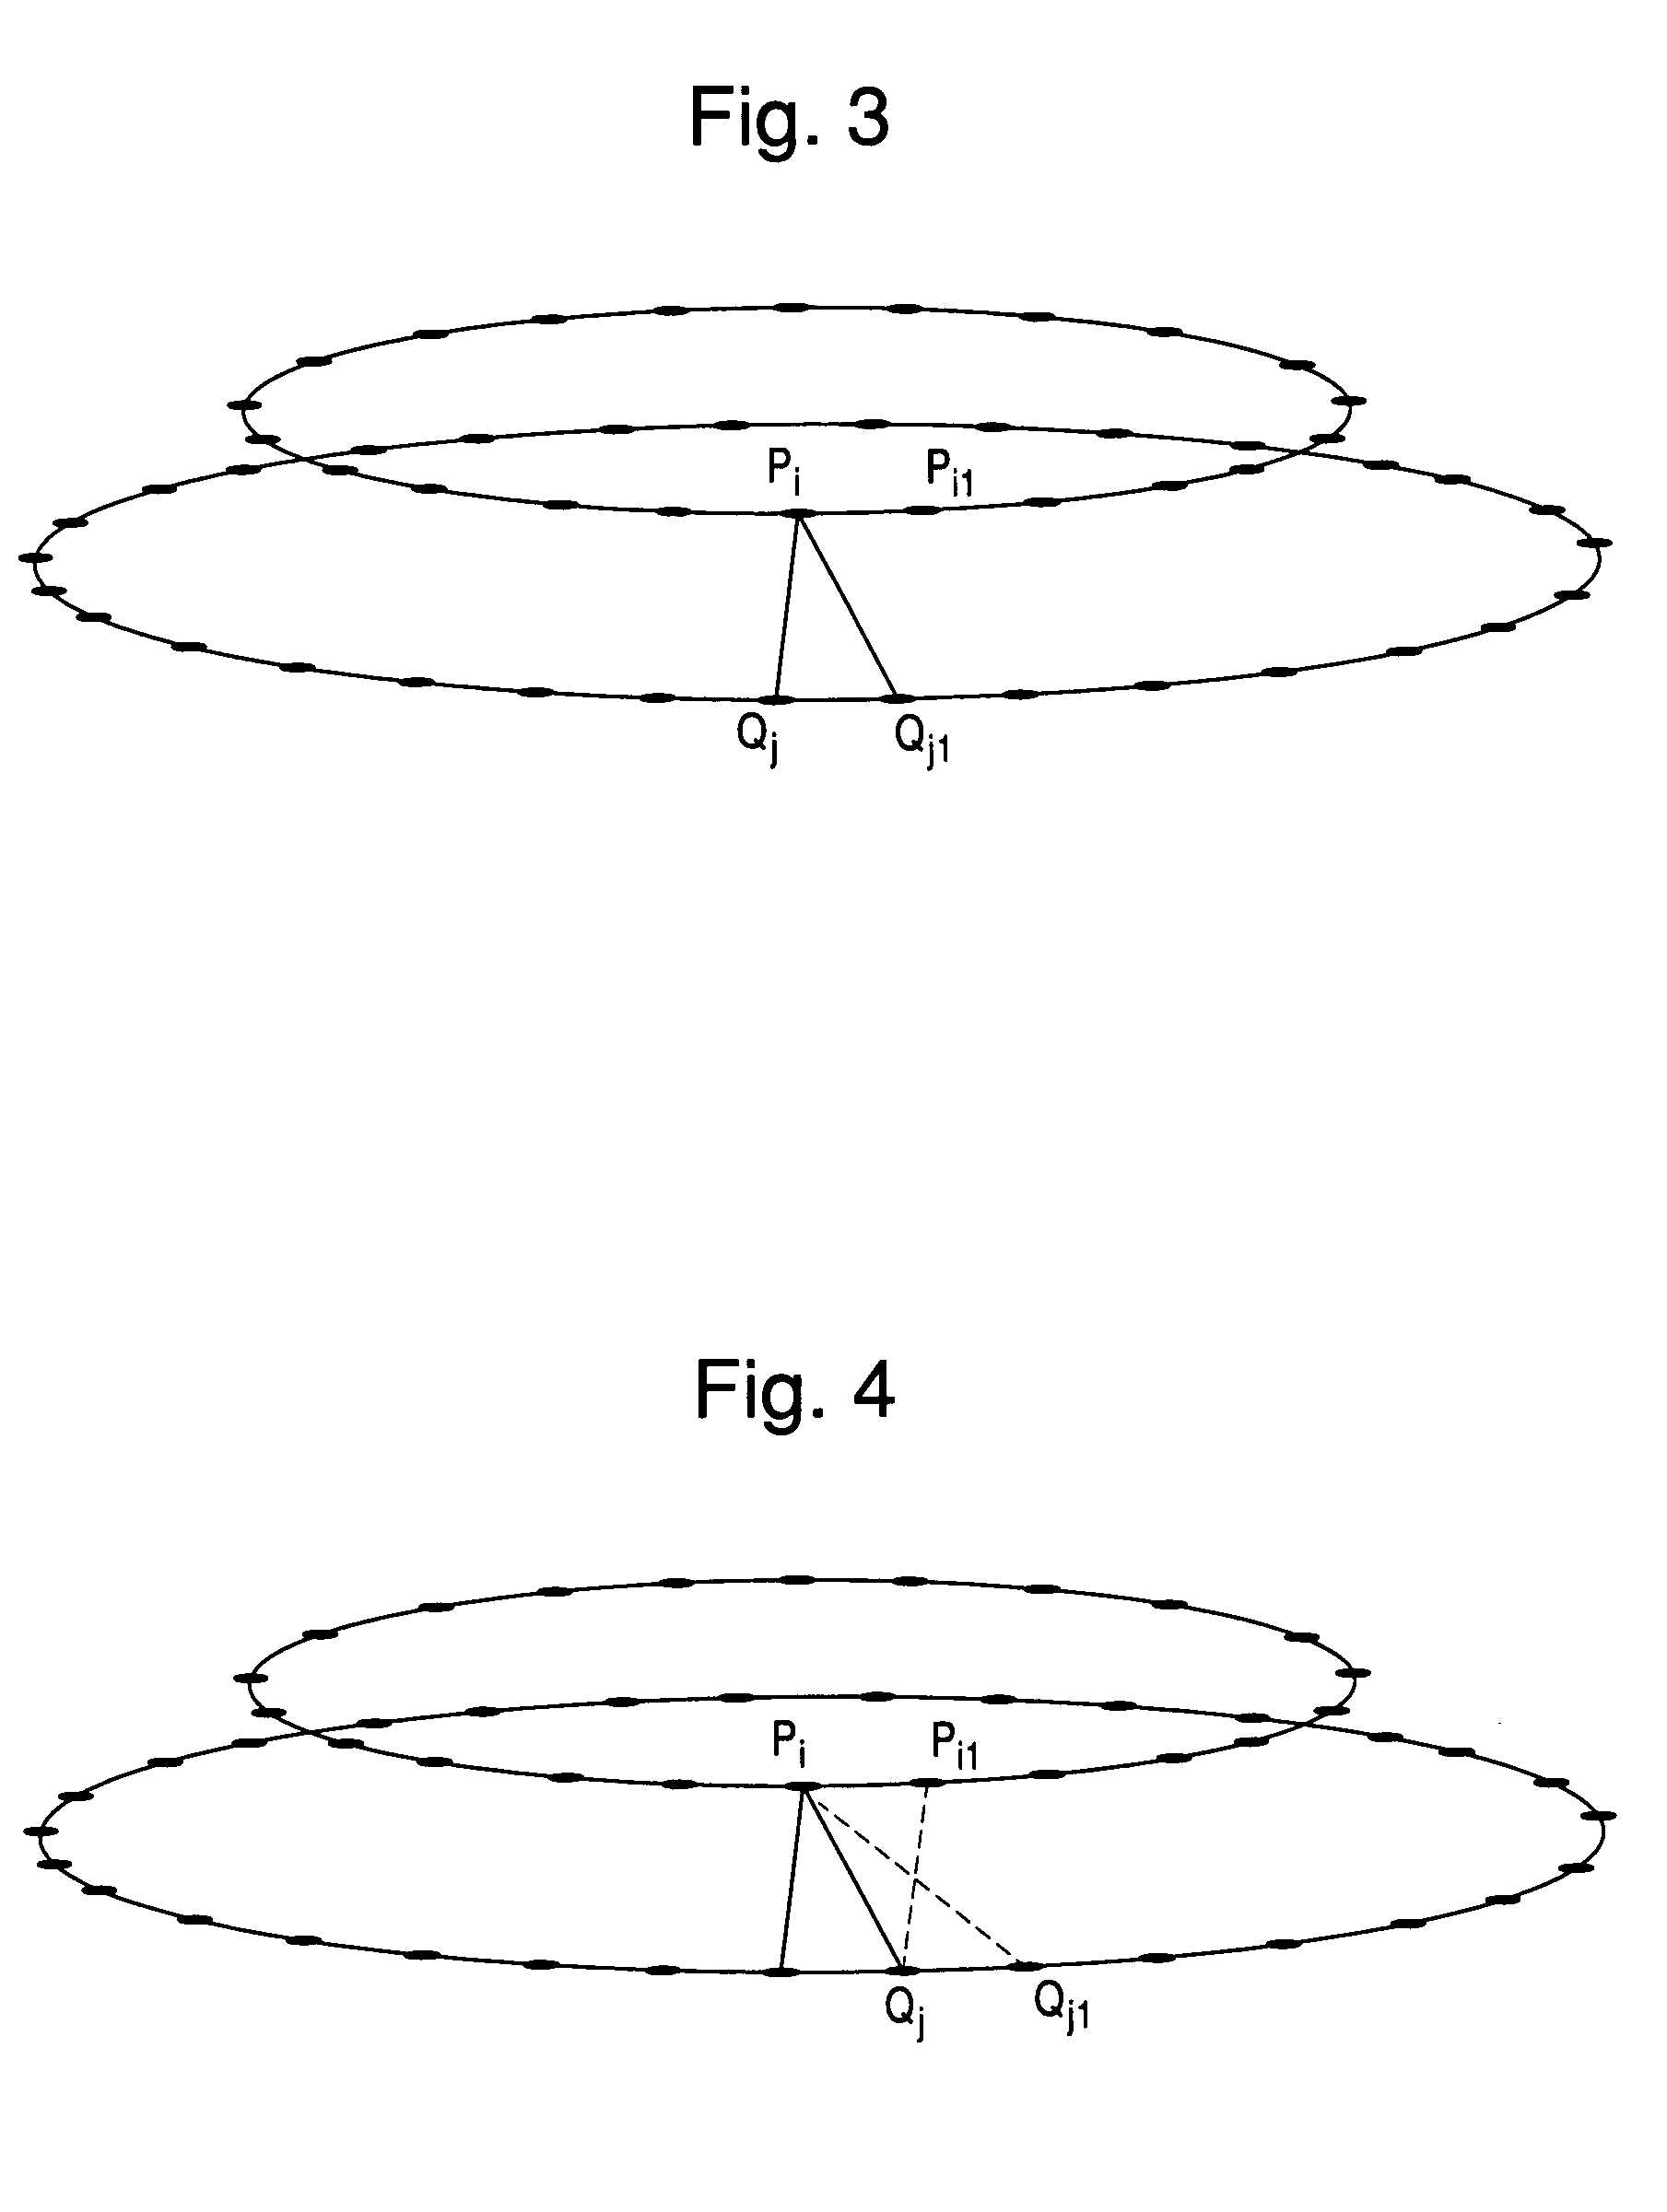 Contour triangulation system and method